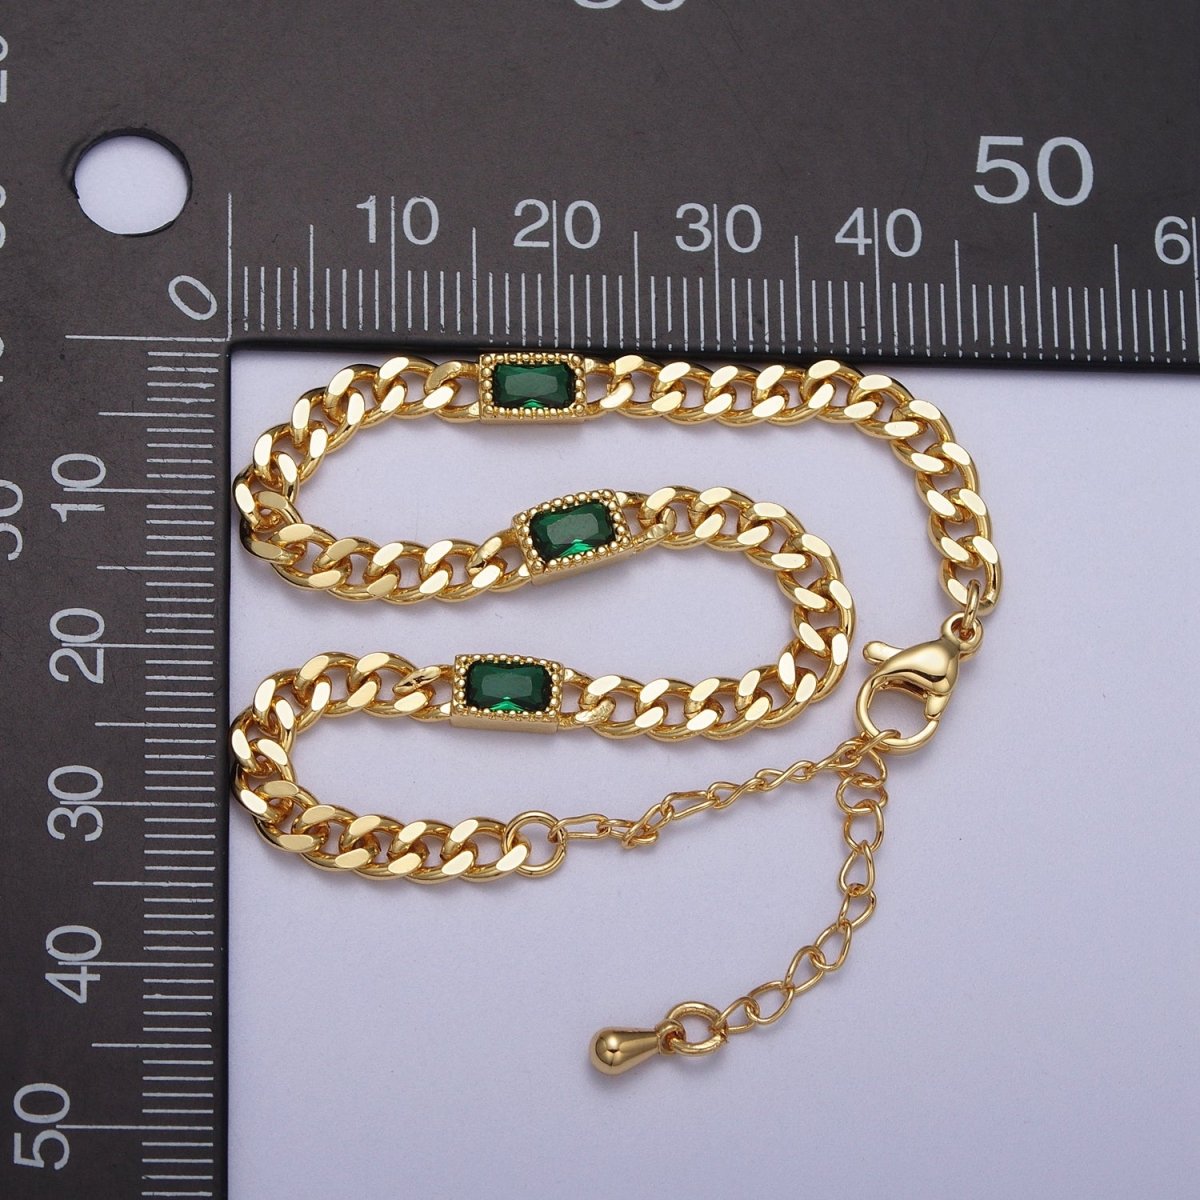 24K Gold Filled Clear, Blue, Green Baguette CZ 3.8mm Curb Chain 6.75 Inch Bracelet | WA-1506 - WA-1508 Clearance Pricing - DLUXCA